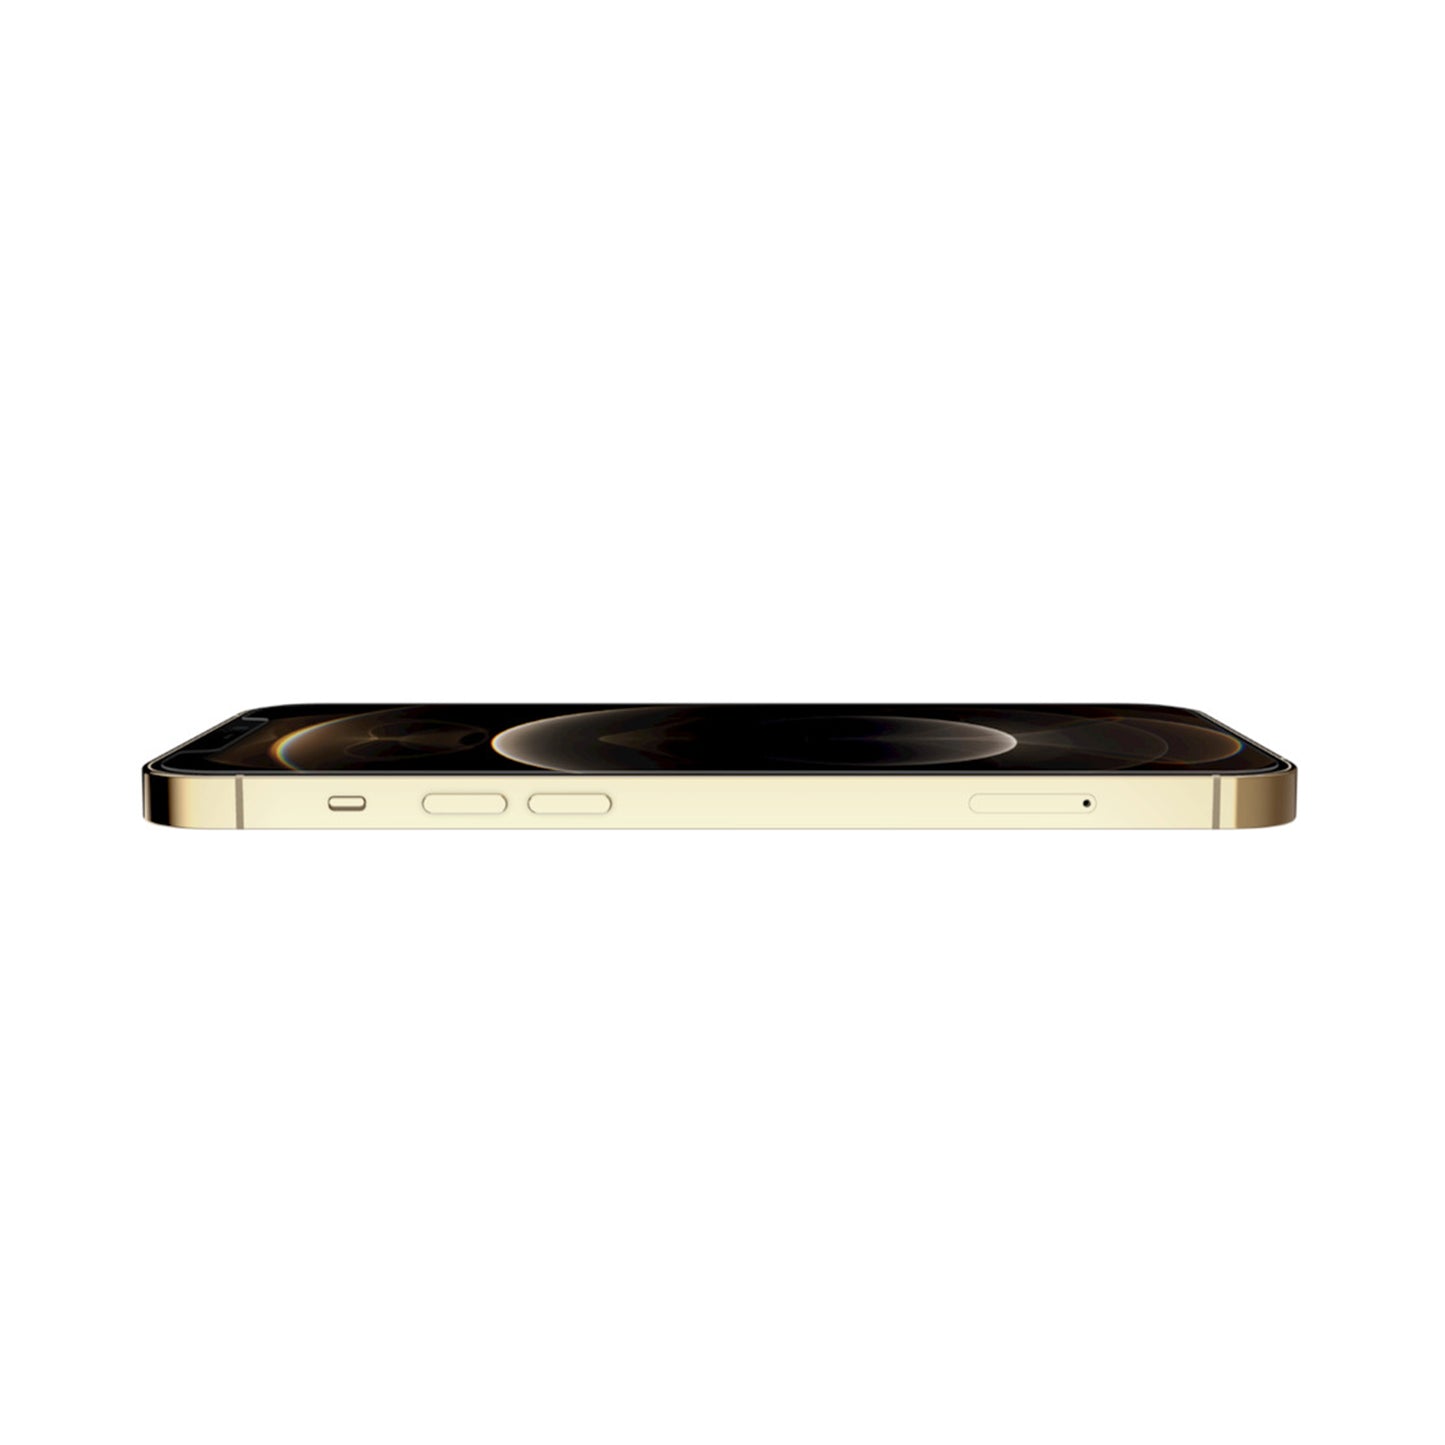 BELKIN Screenforce Ultraglass for iPhone 12 Pro Max - Clear